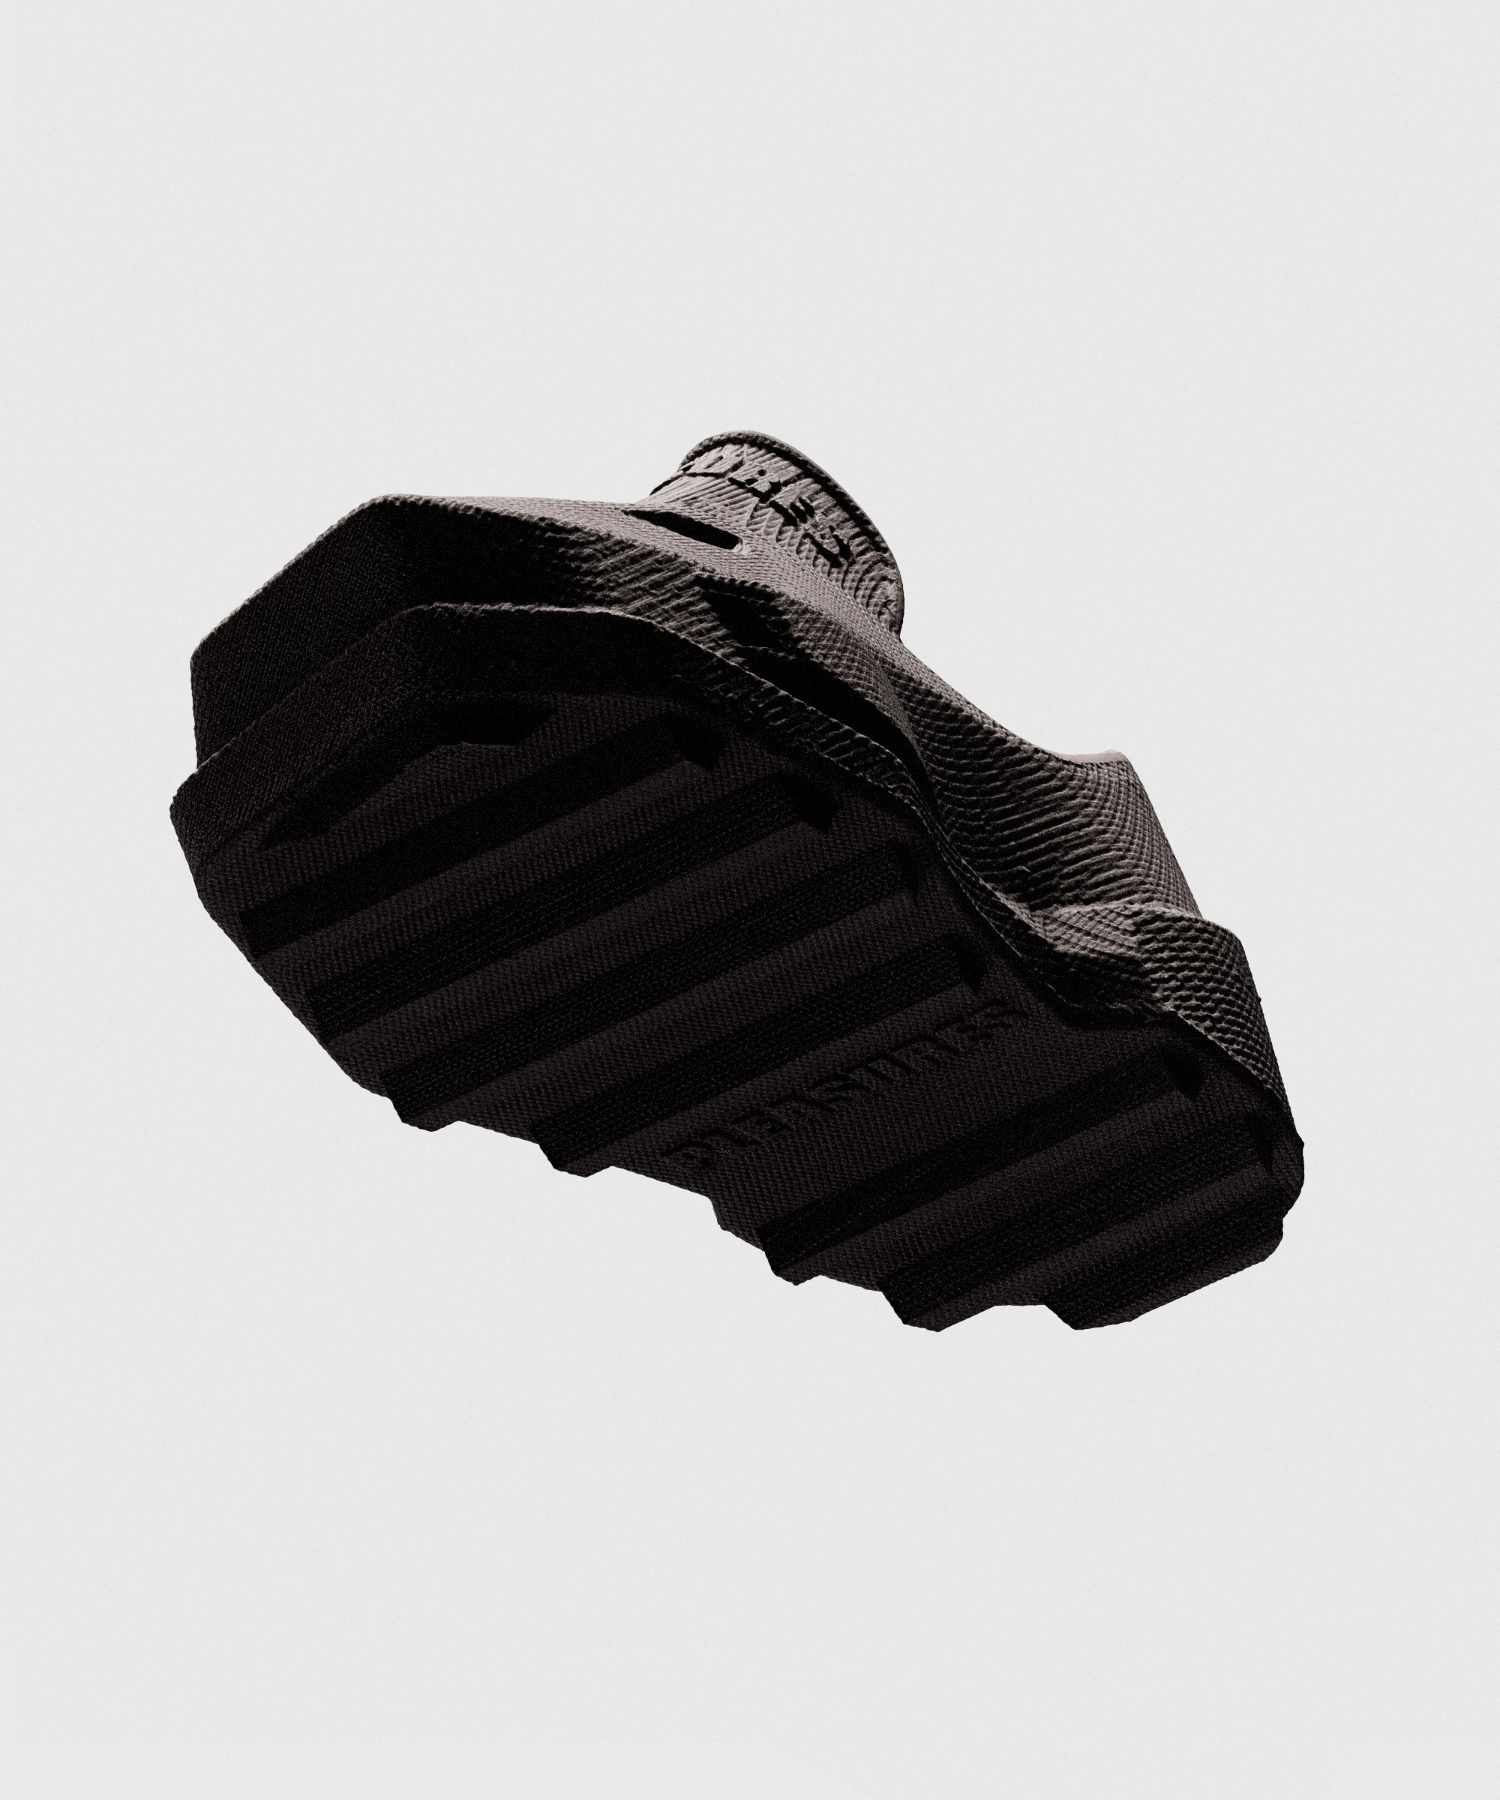 PLEASURES' 3D-Printed Zellerfeld Shoe Is an 'Evangelion' Nod